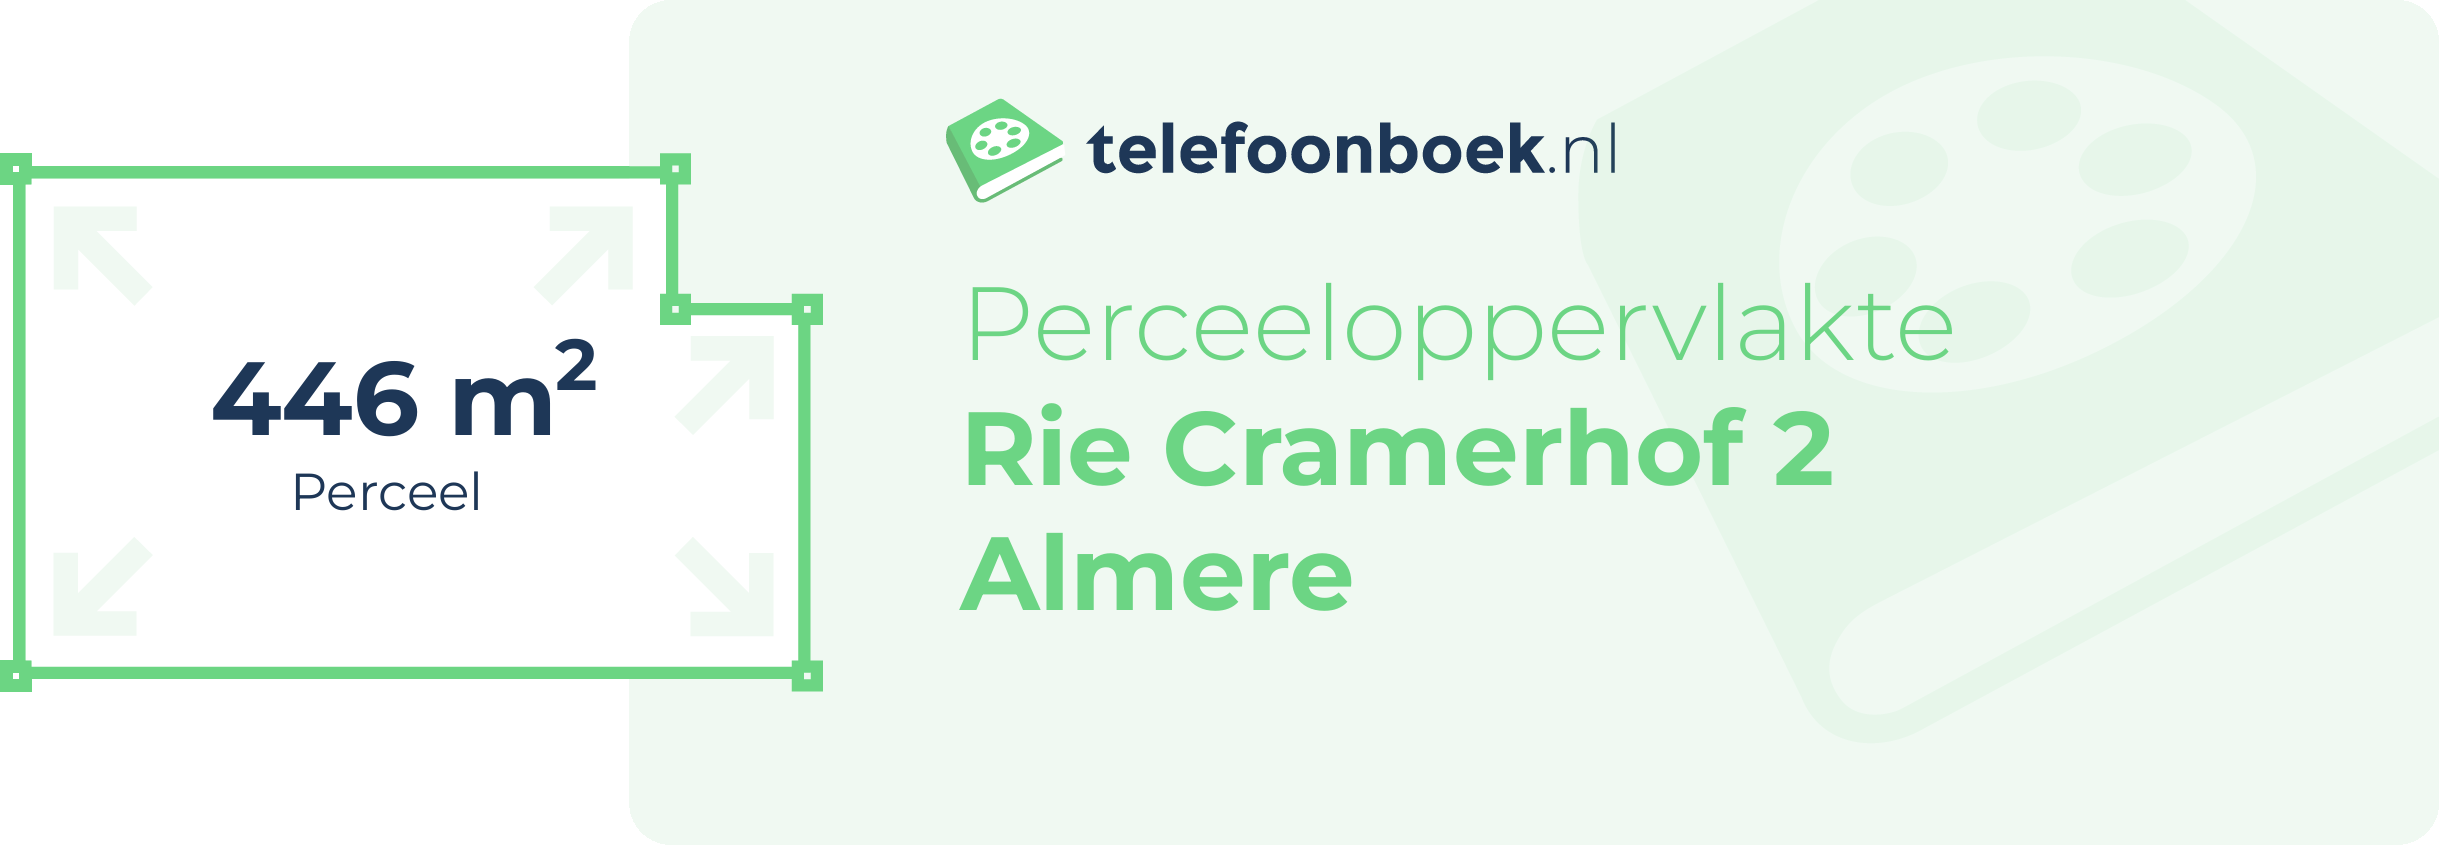 Perceeloppervlakte Rie Cramerhof 2 Almere